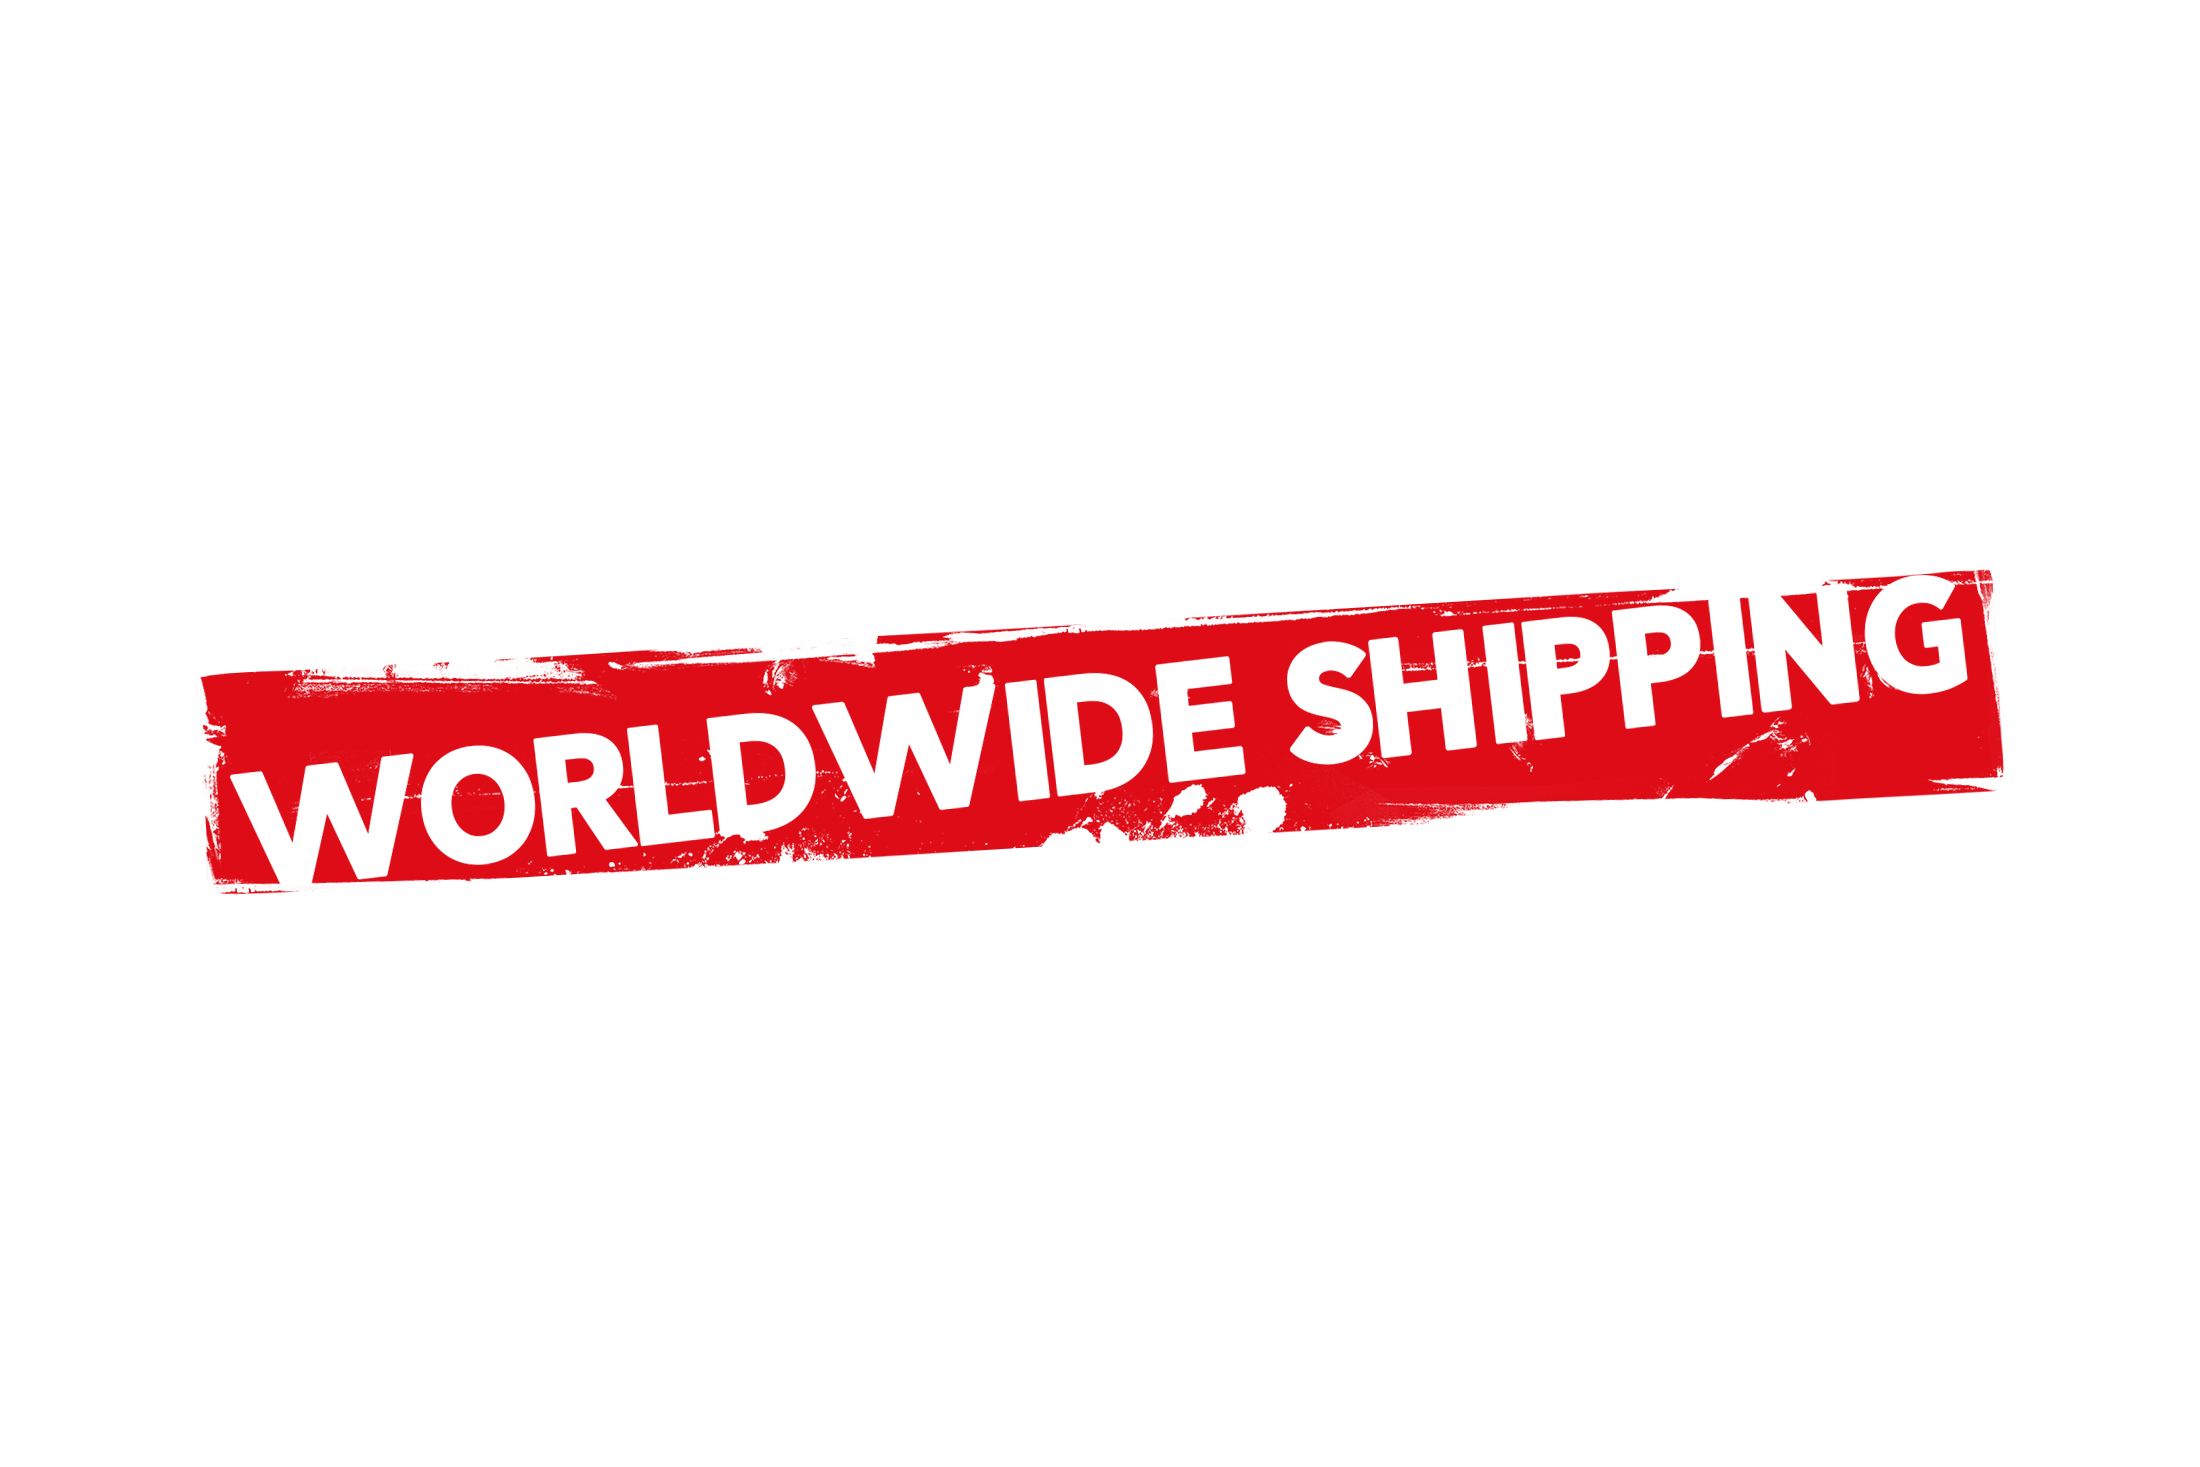 Grunge worldwide shipping label PSD